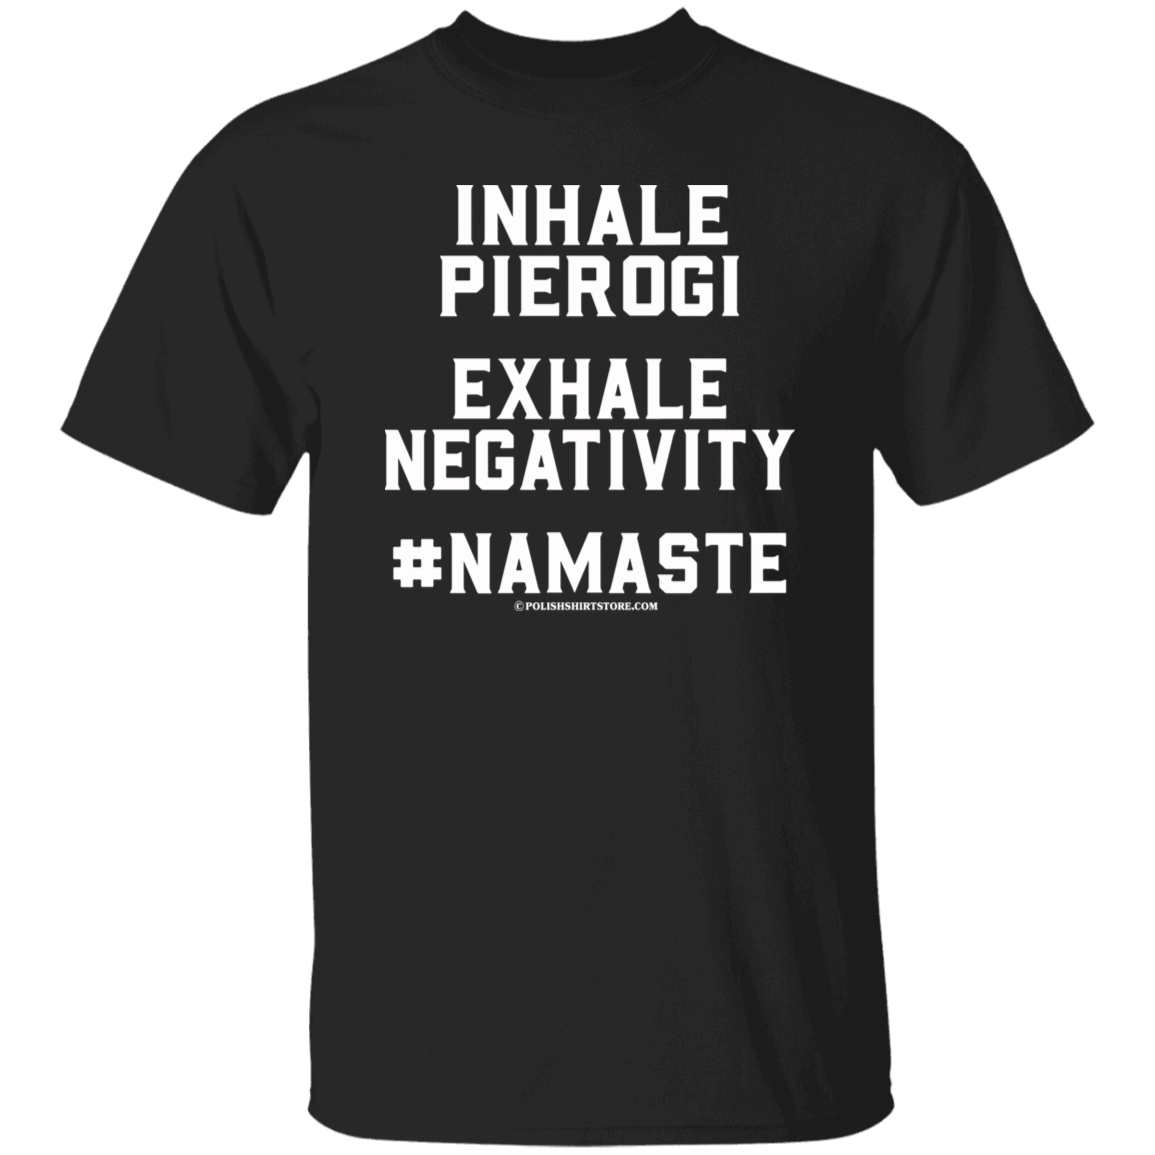 Inhale Pierogi Exhale Negativity #Namaste Apparel CustomCat G500 5.3 oz. T-Shirt Black S